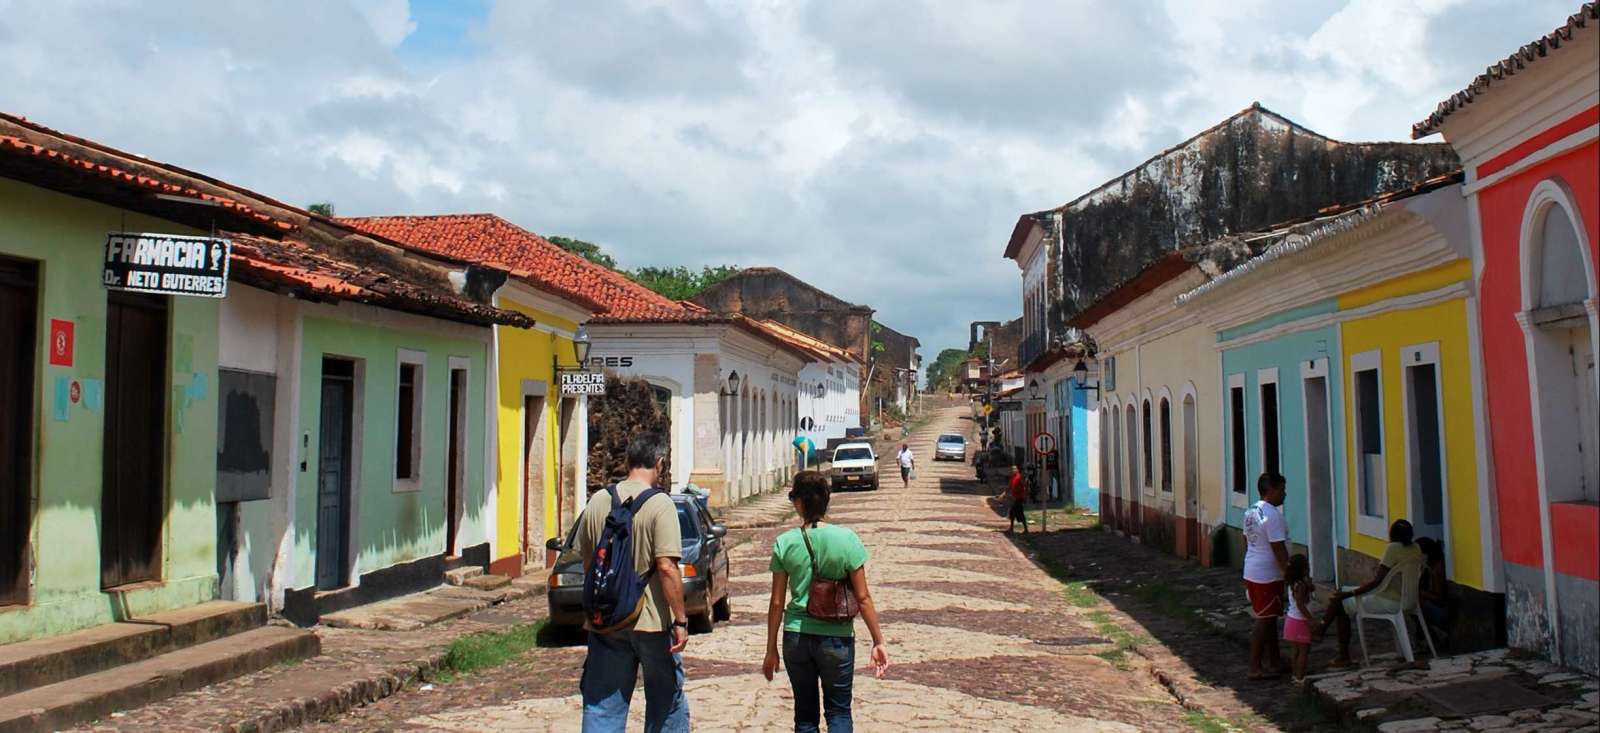 Voyage à thème : Nordeste  : Atinsion on arrive